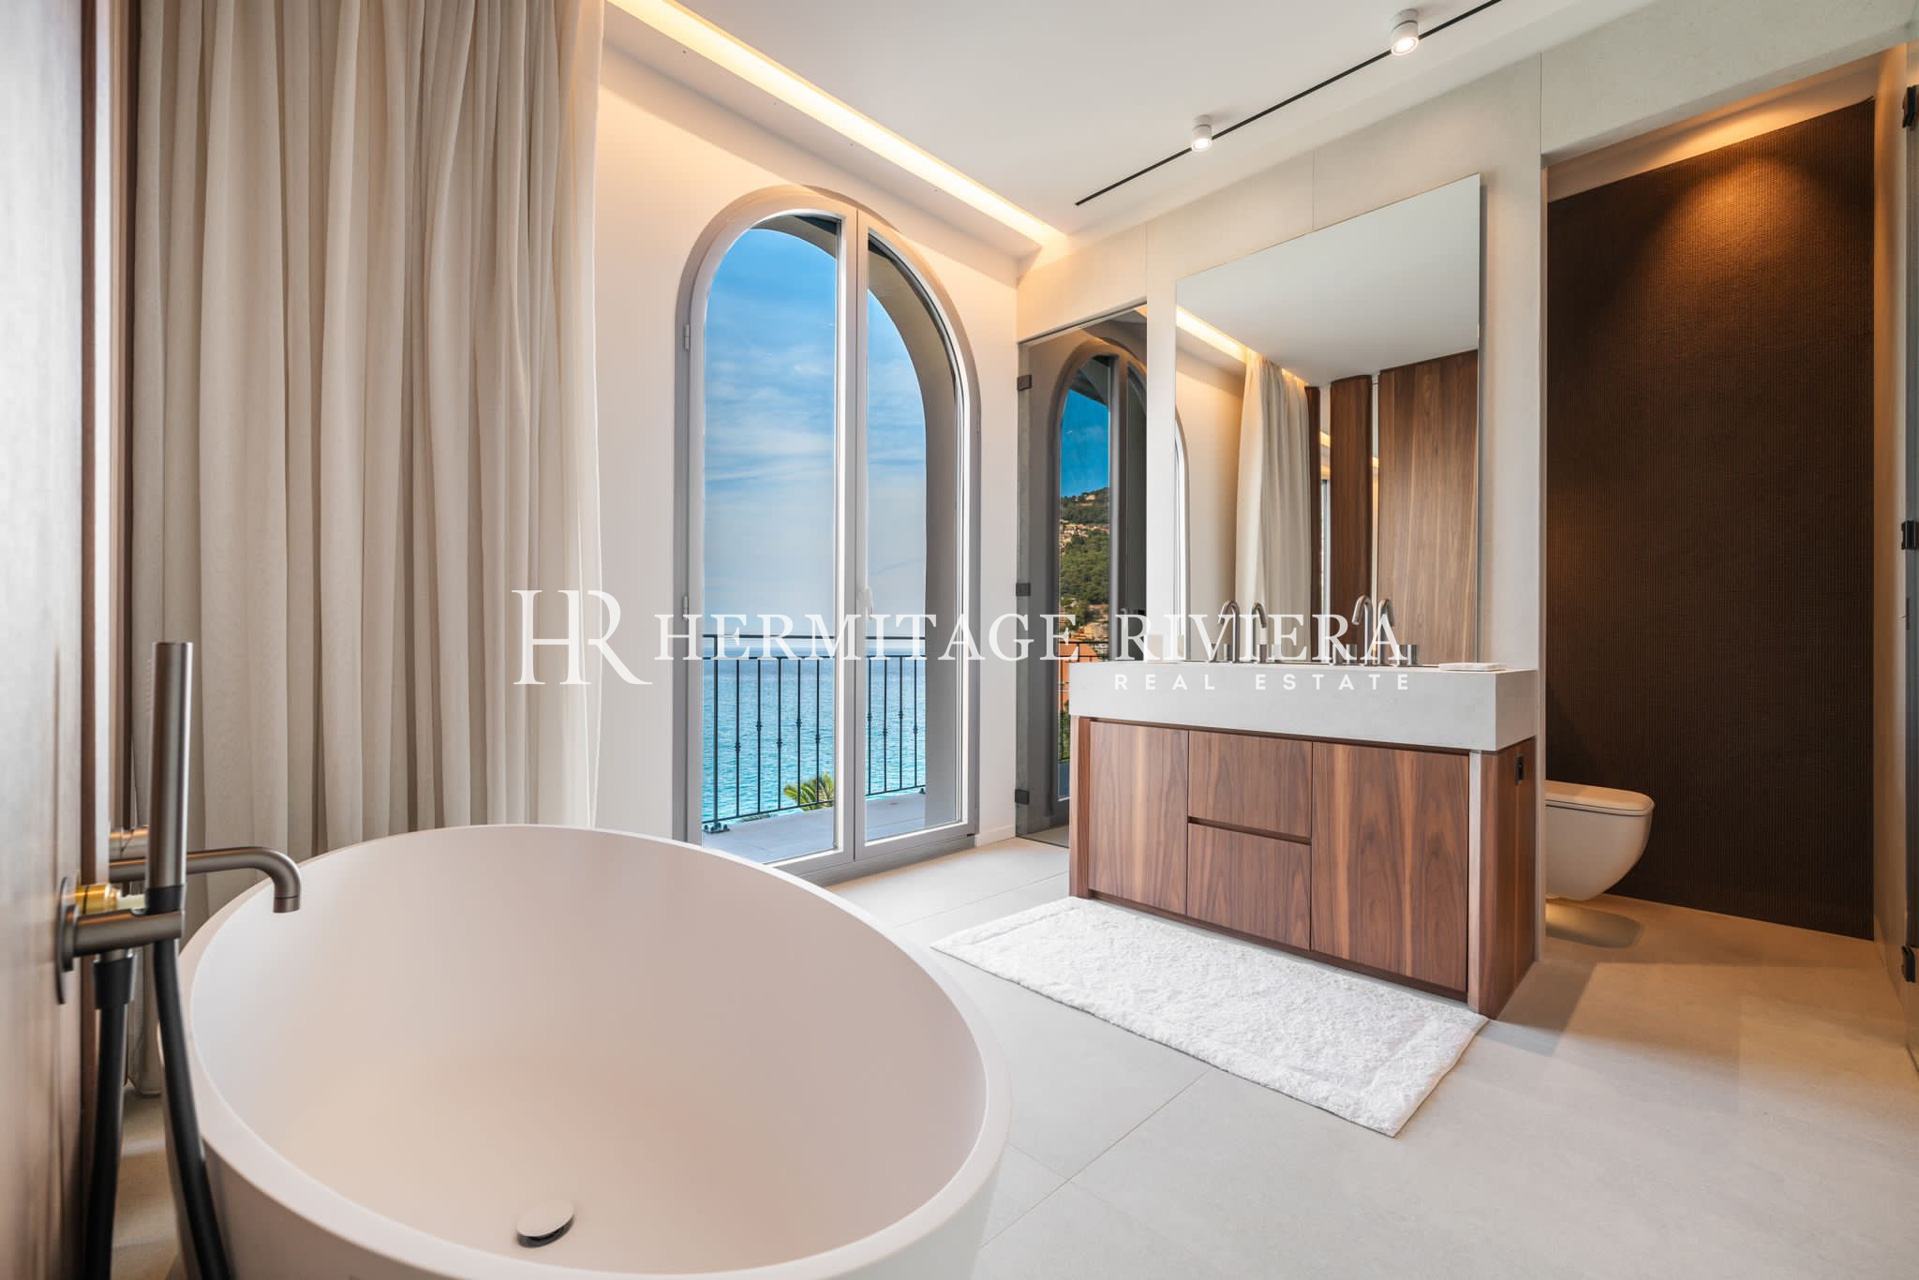 Recently renovated contemporary villa near Monaco (image 11)